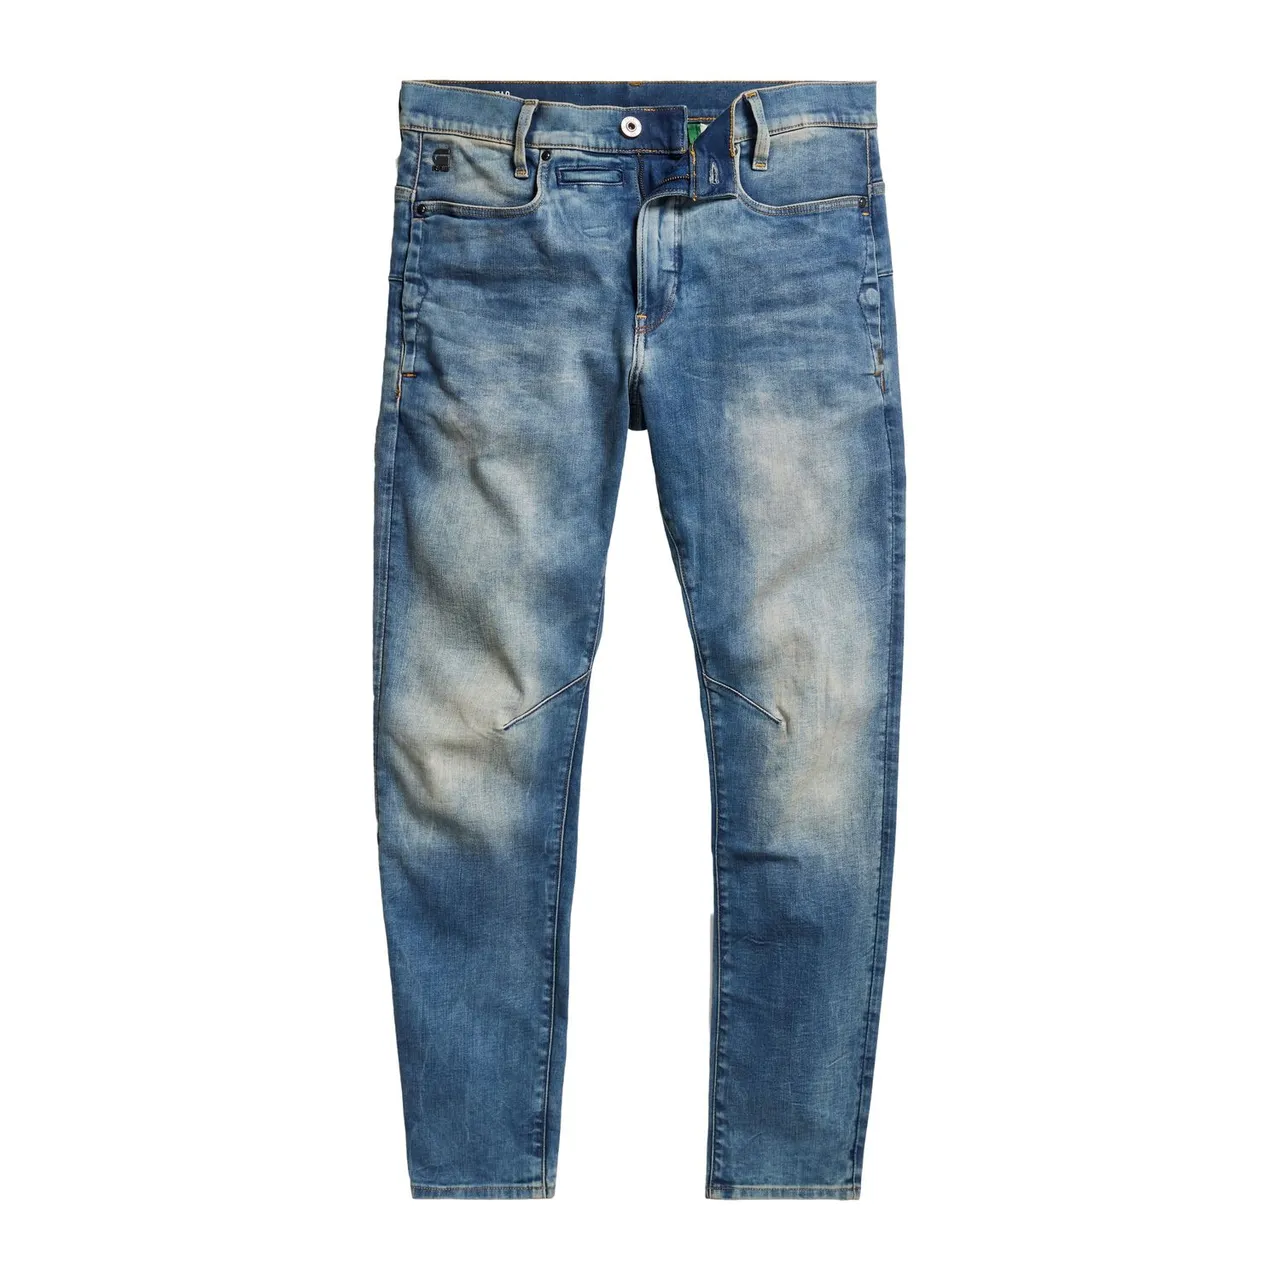 G-Star Herren Jeans D-STAG 3D SLIM Fit - Blau - Medium Aged